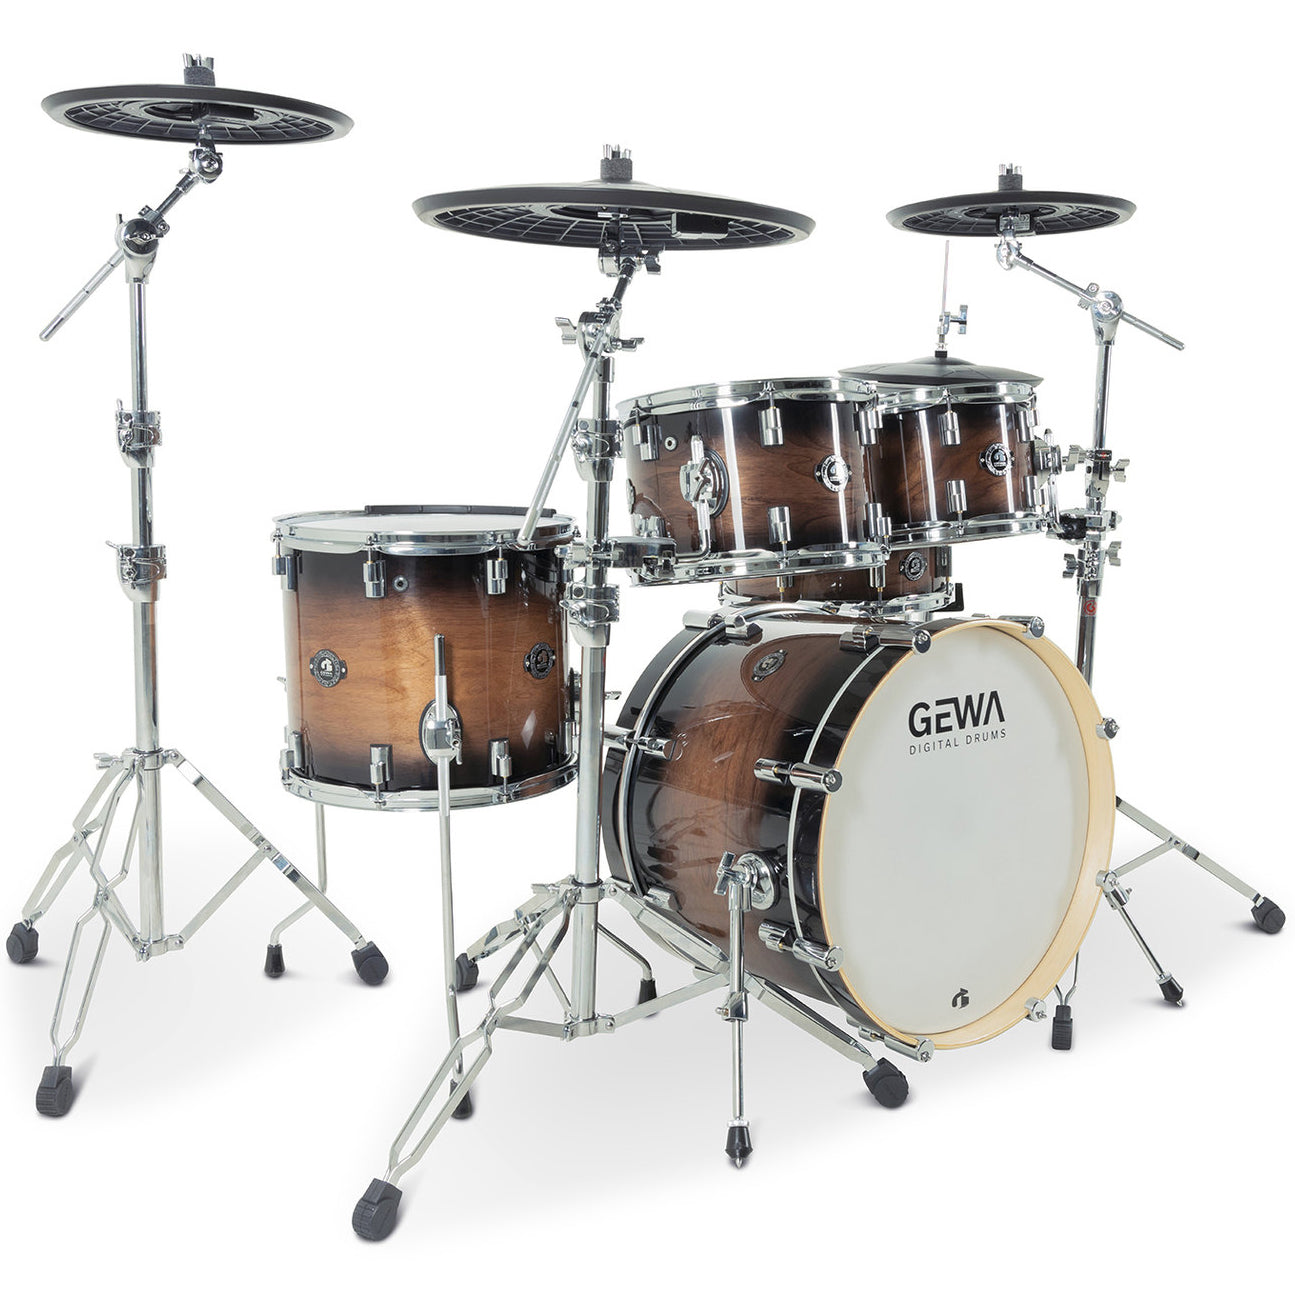 GEWA G9 Pro 5 SE Electronic Drum Set - Walnut Burst, View 4